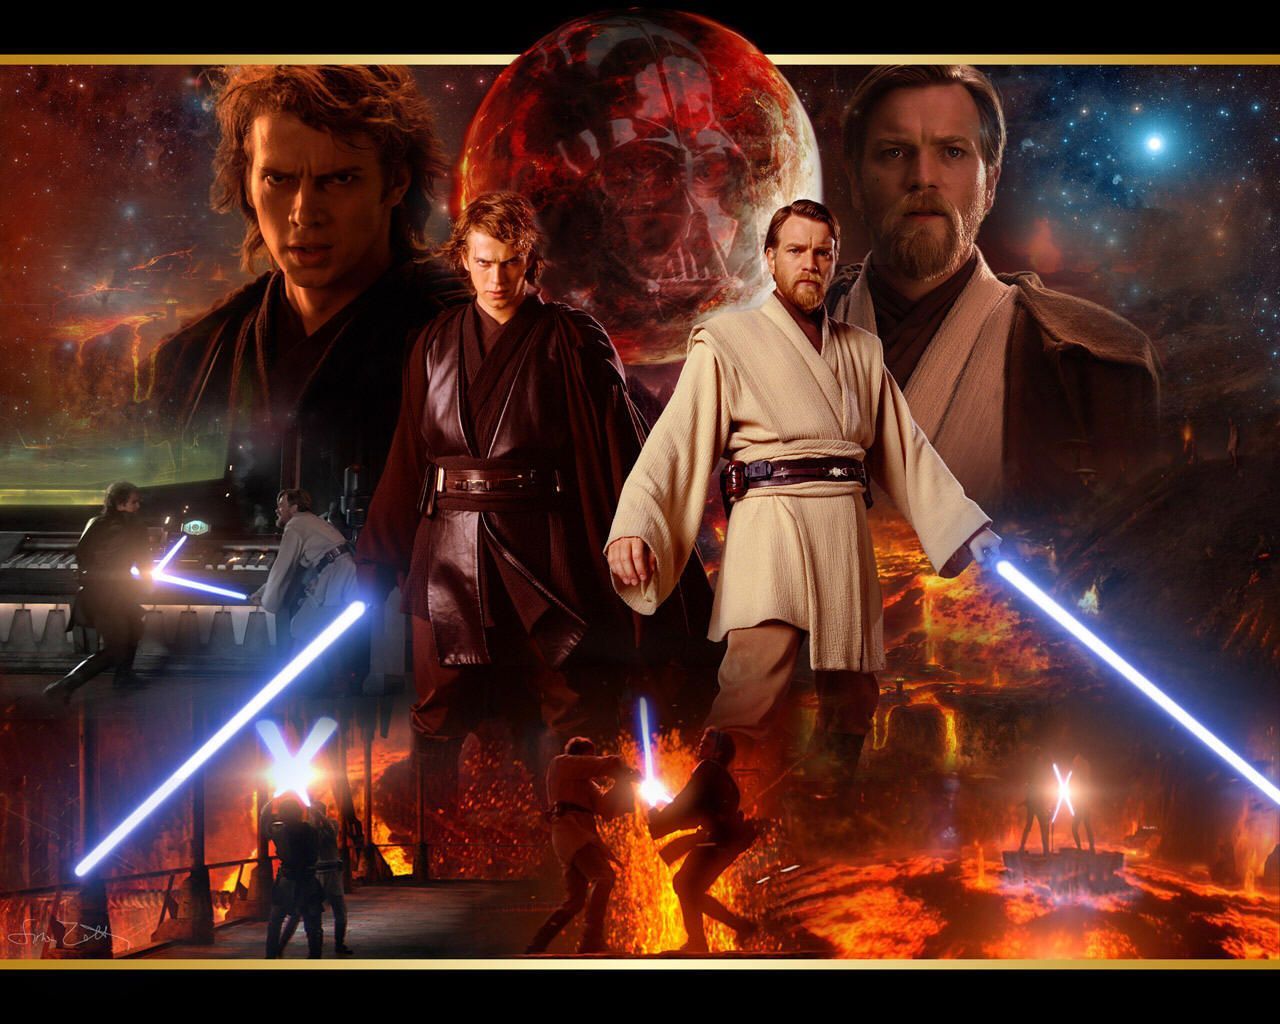 Star Wars: Revenge of the Sith Work of Art. Papel de parede star wars, Star wars poster, Star wars